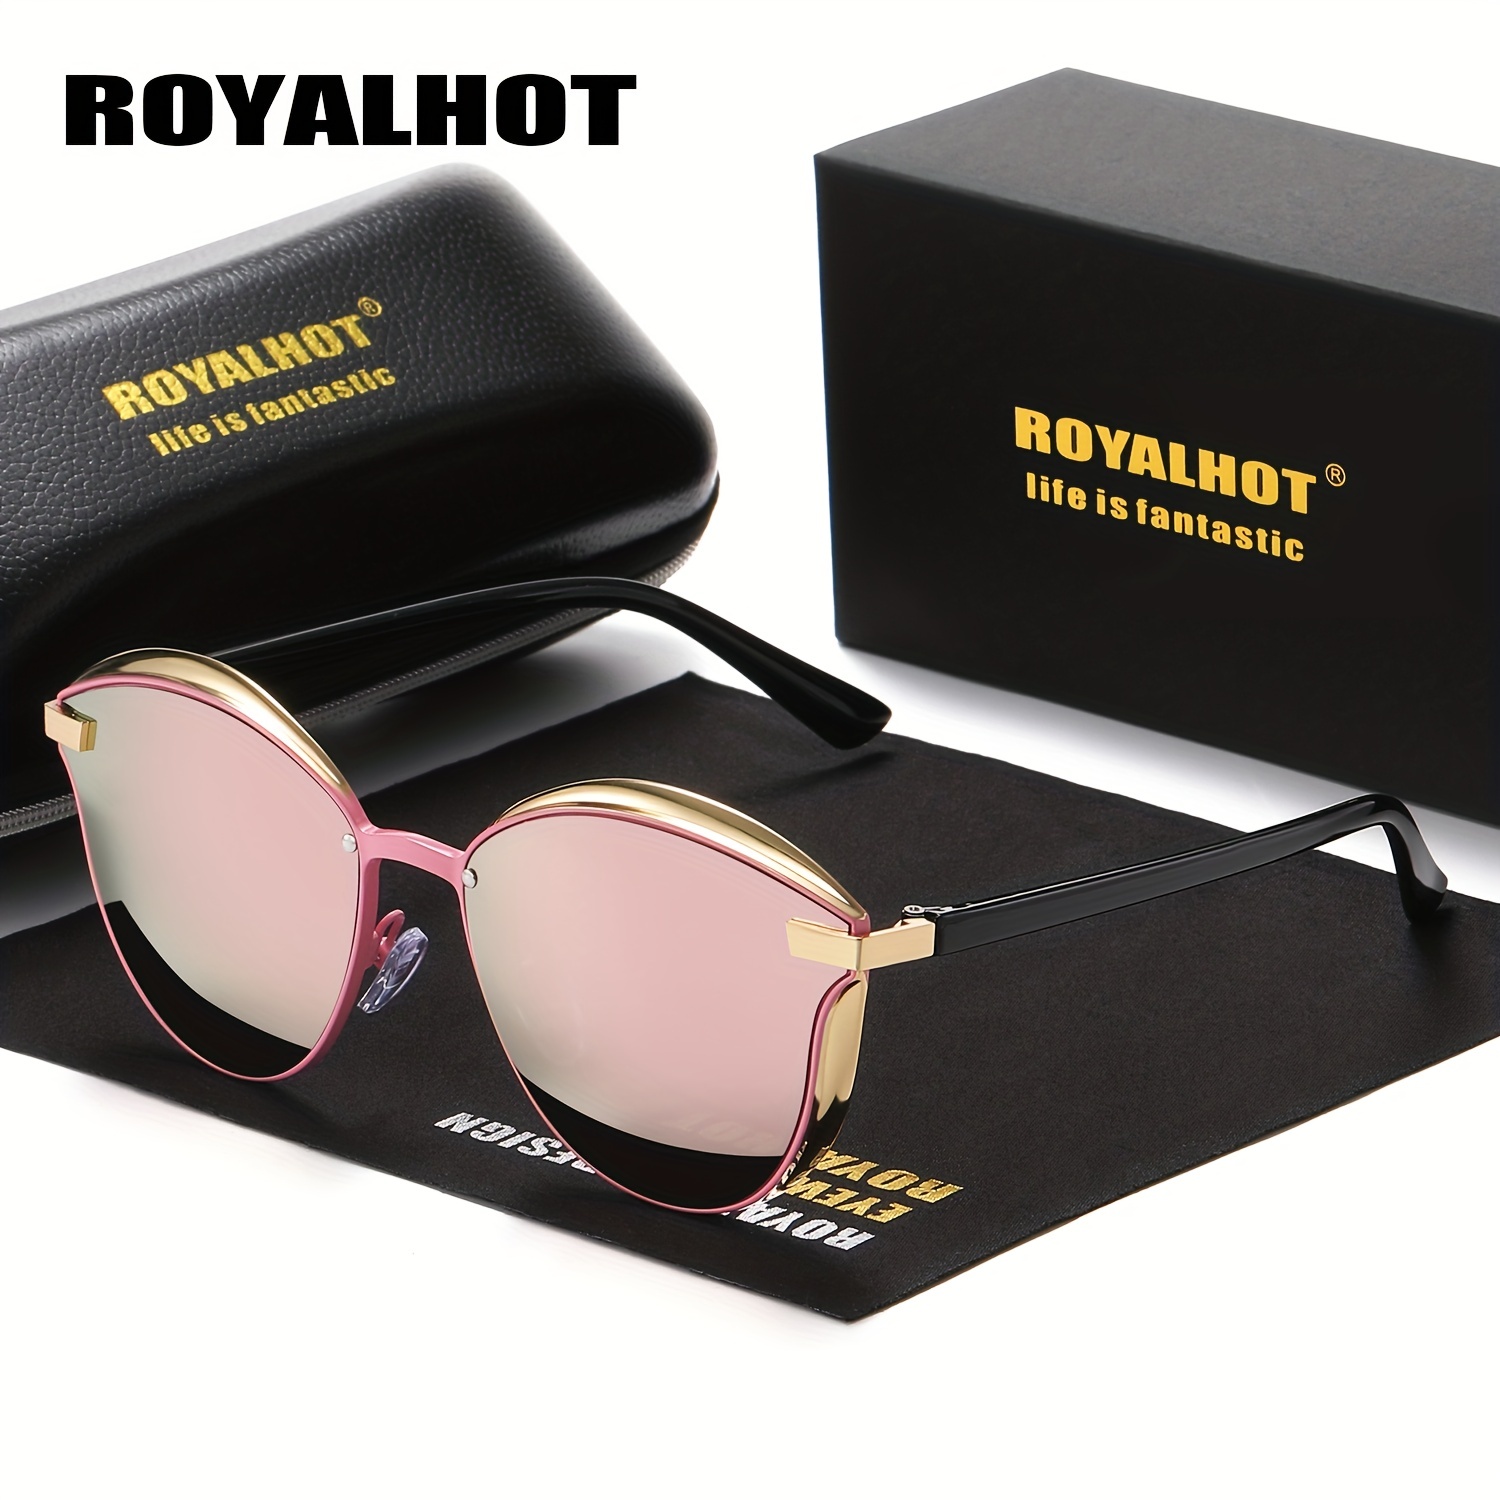 Premium Beautiful Cool Wrap Around Polarized Sunglasses For Men